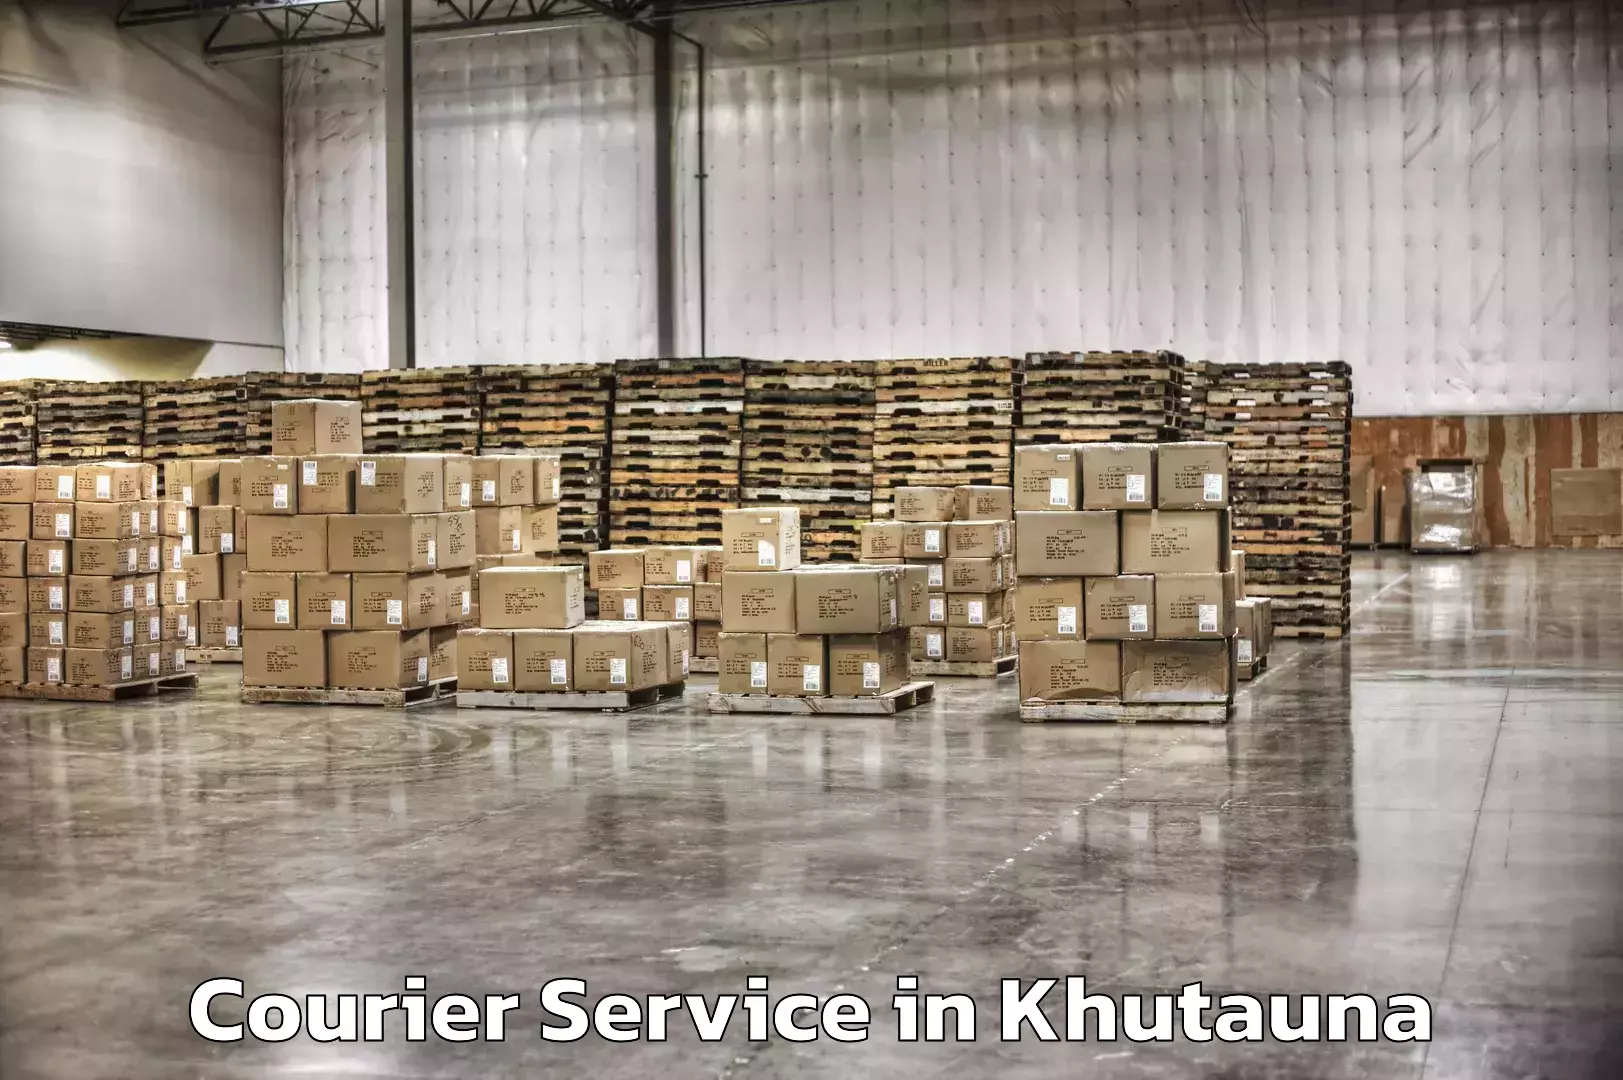 High-performance logistics in Khutauna